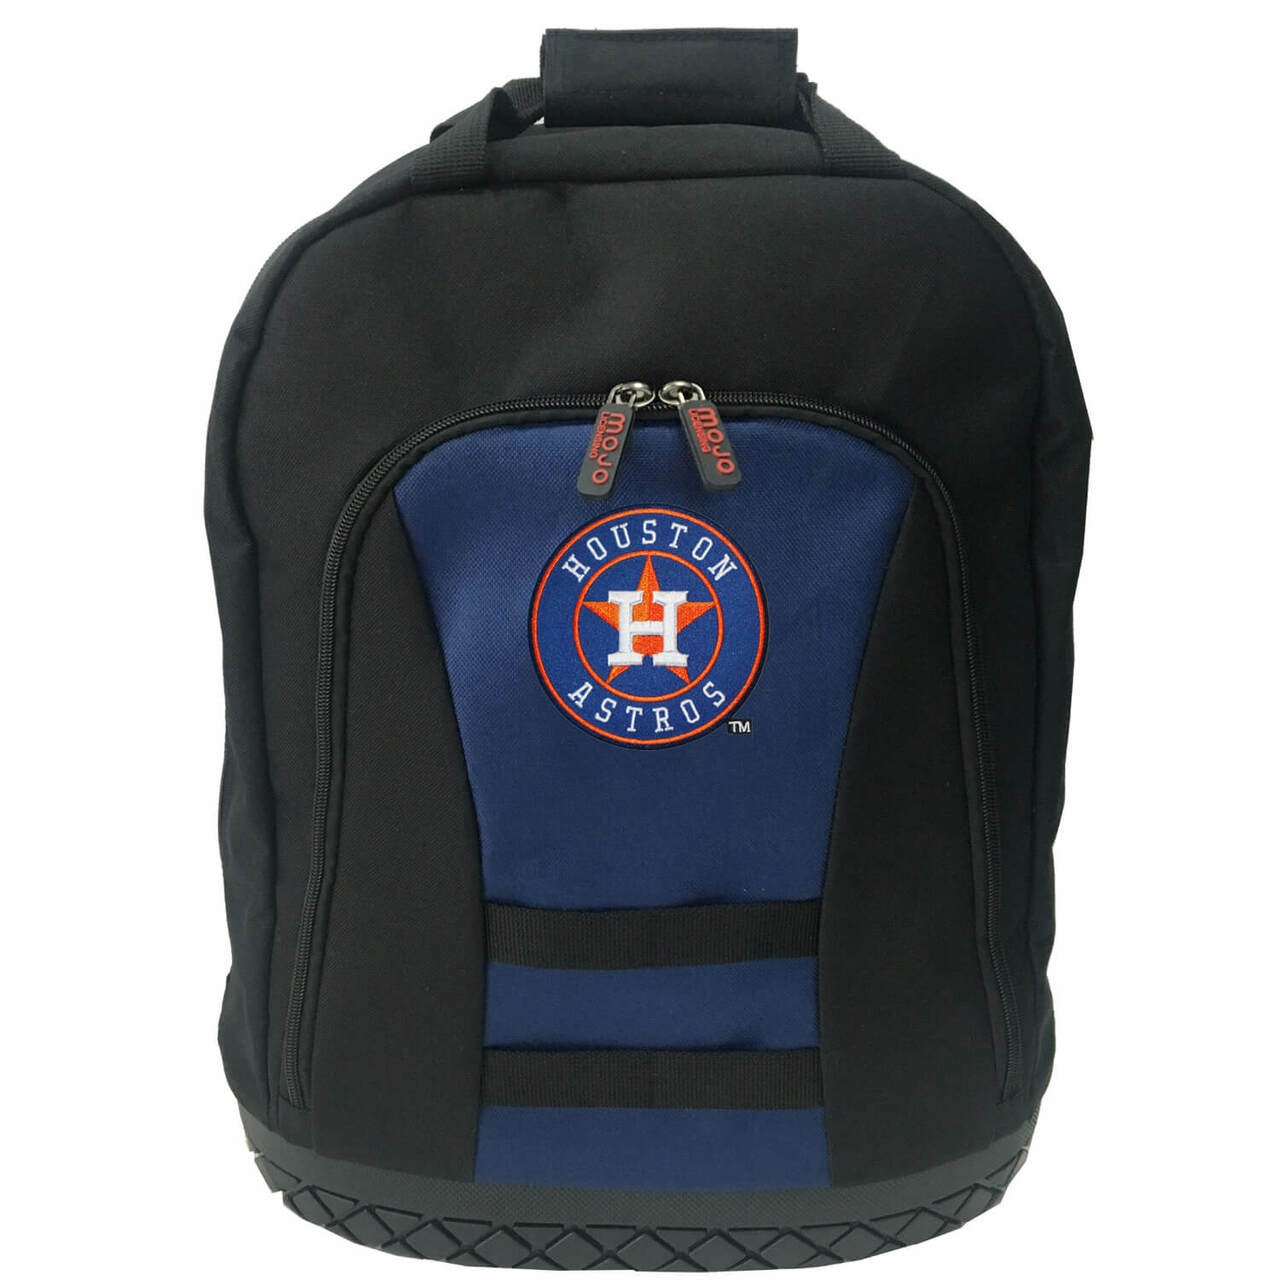 Houston Astros Tool Bag Backpack